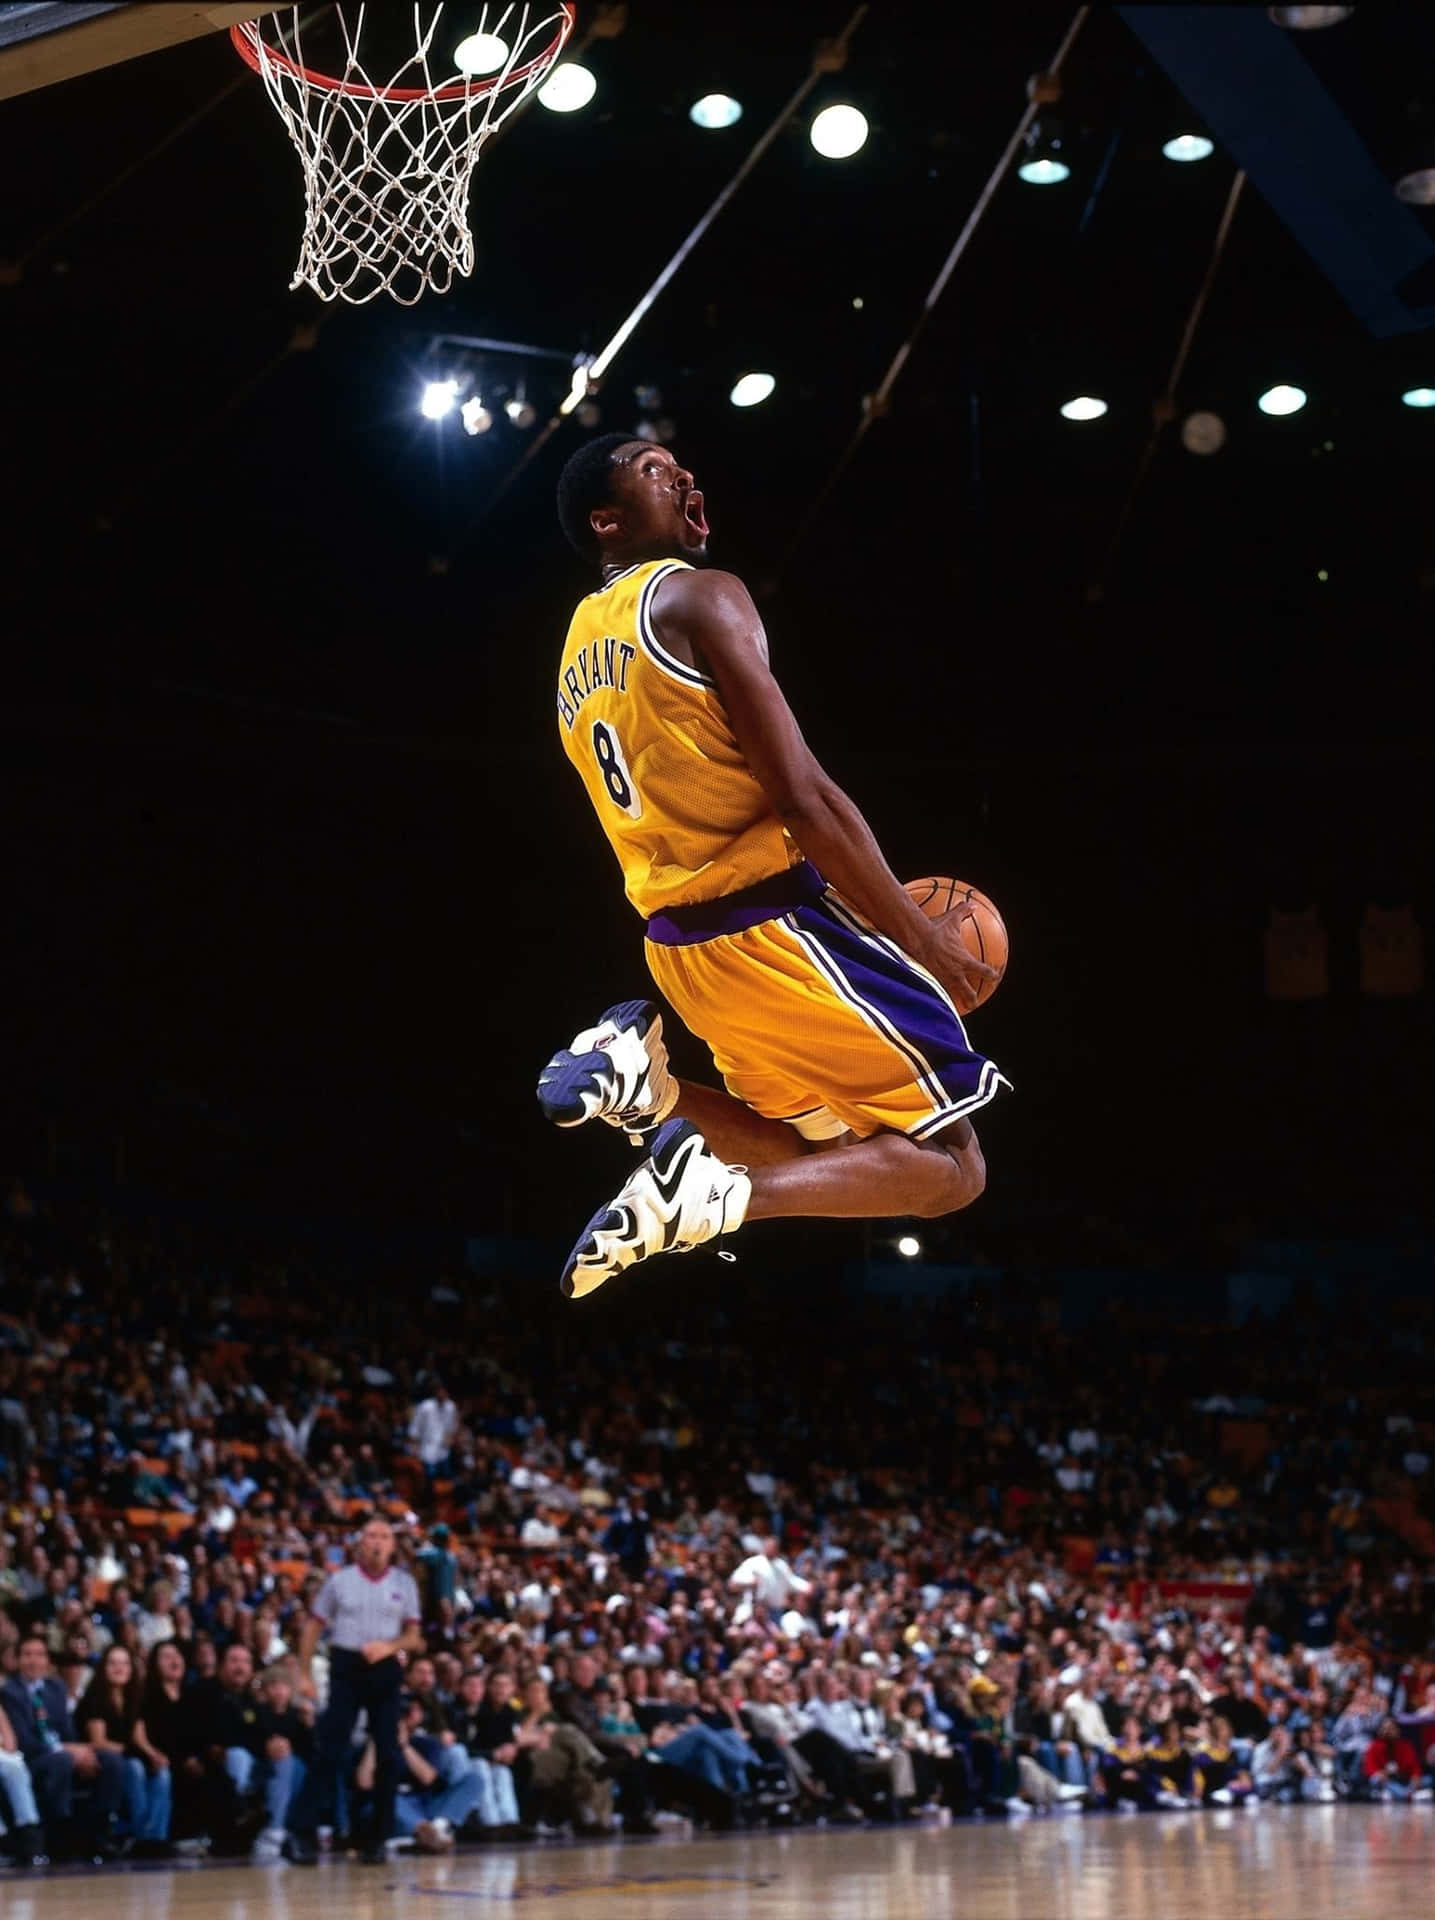 A man in the air jumping to dunk - NBA, basketball, Kobe Bryant